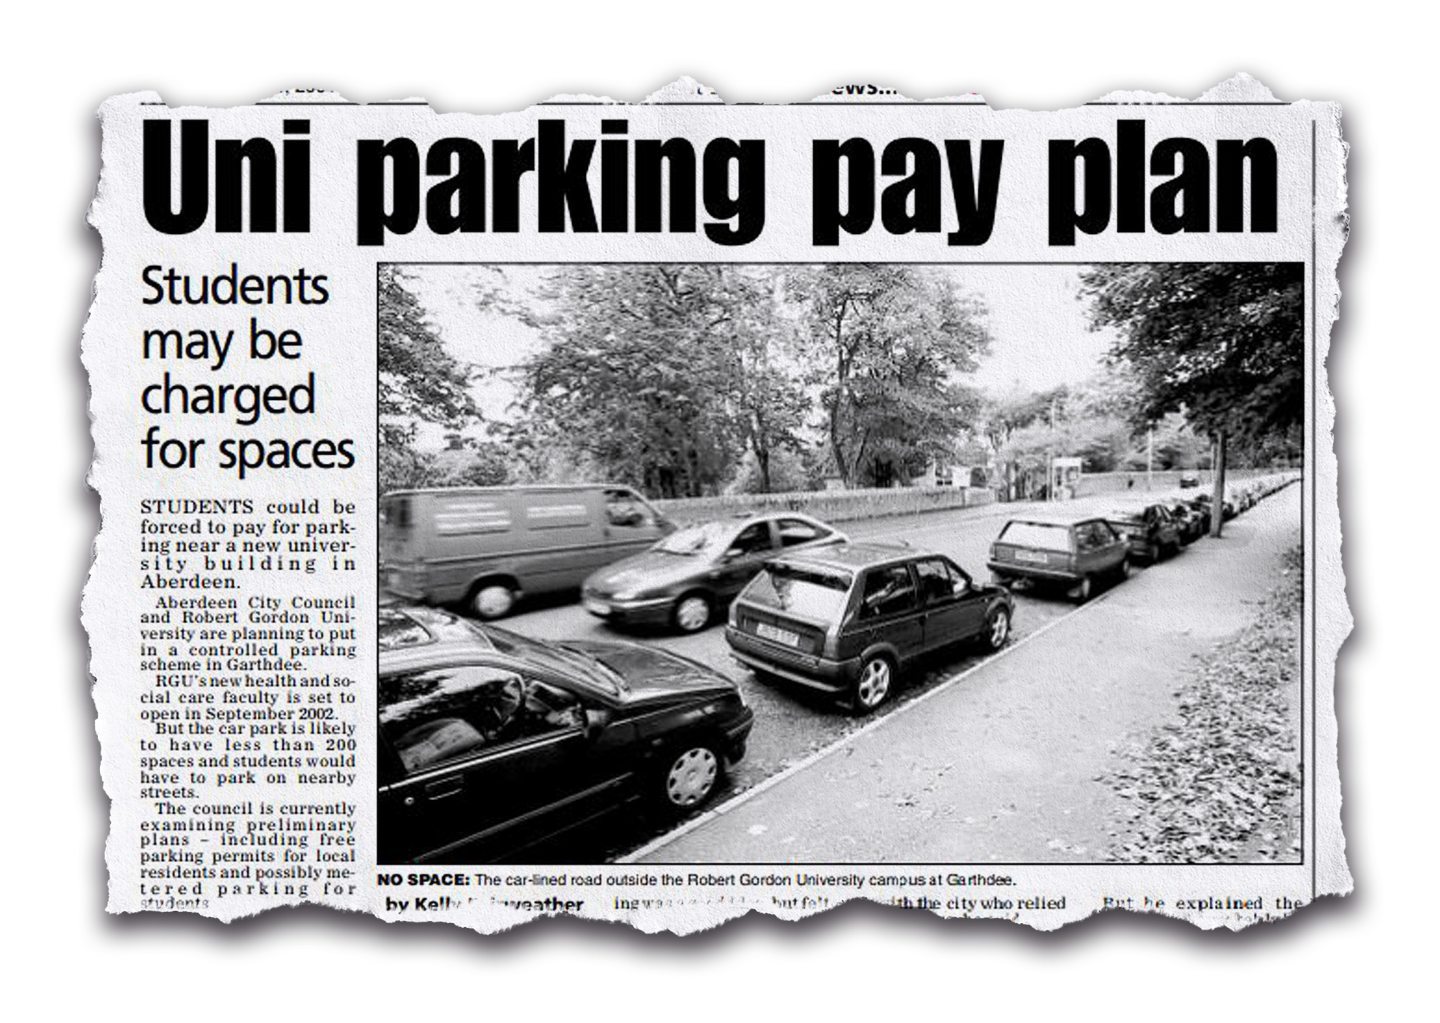 Newspaper clipping from 2001 about Robert Gordon University's Garthdee parking pay plan.